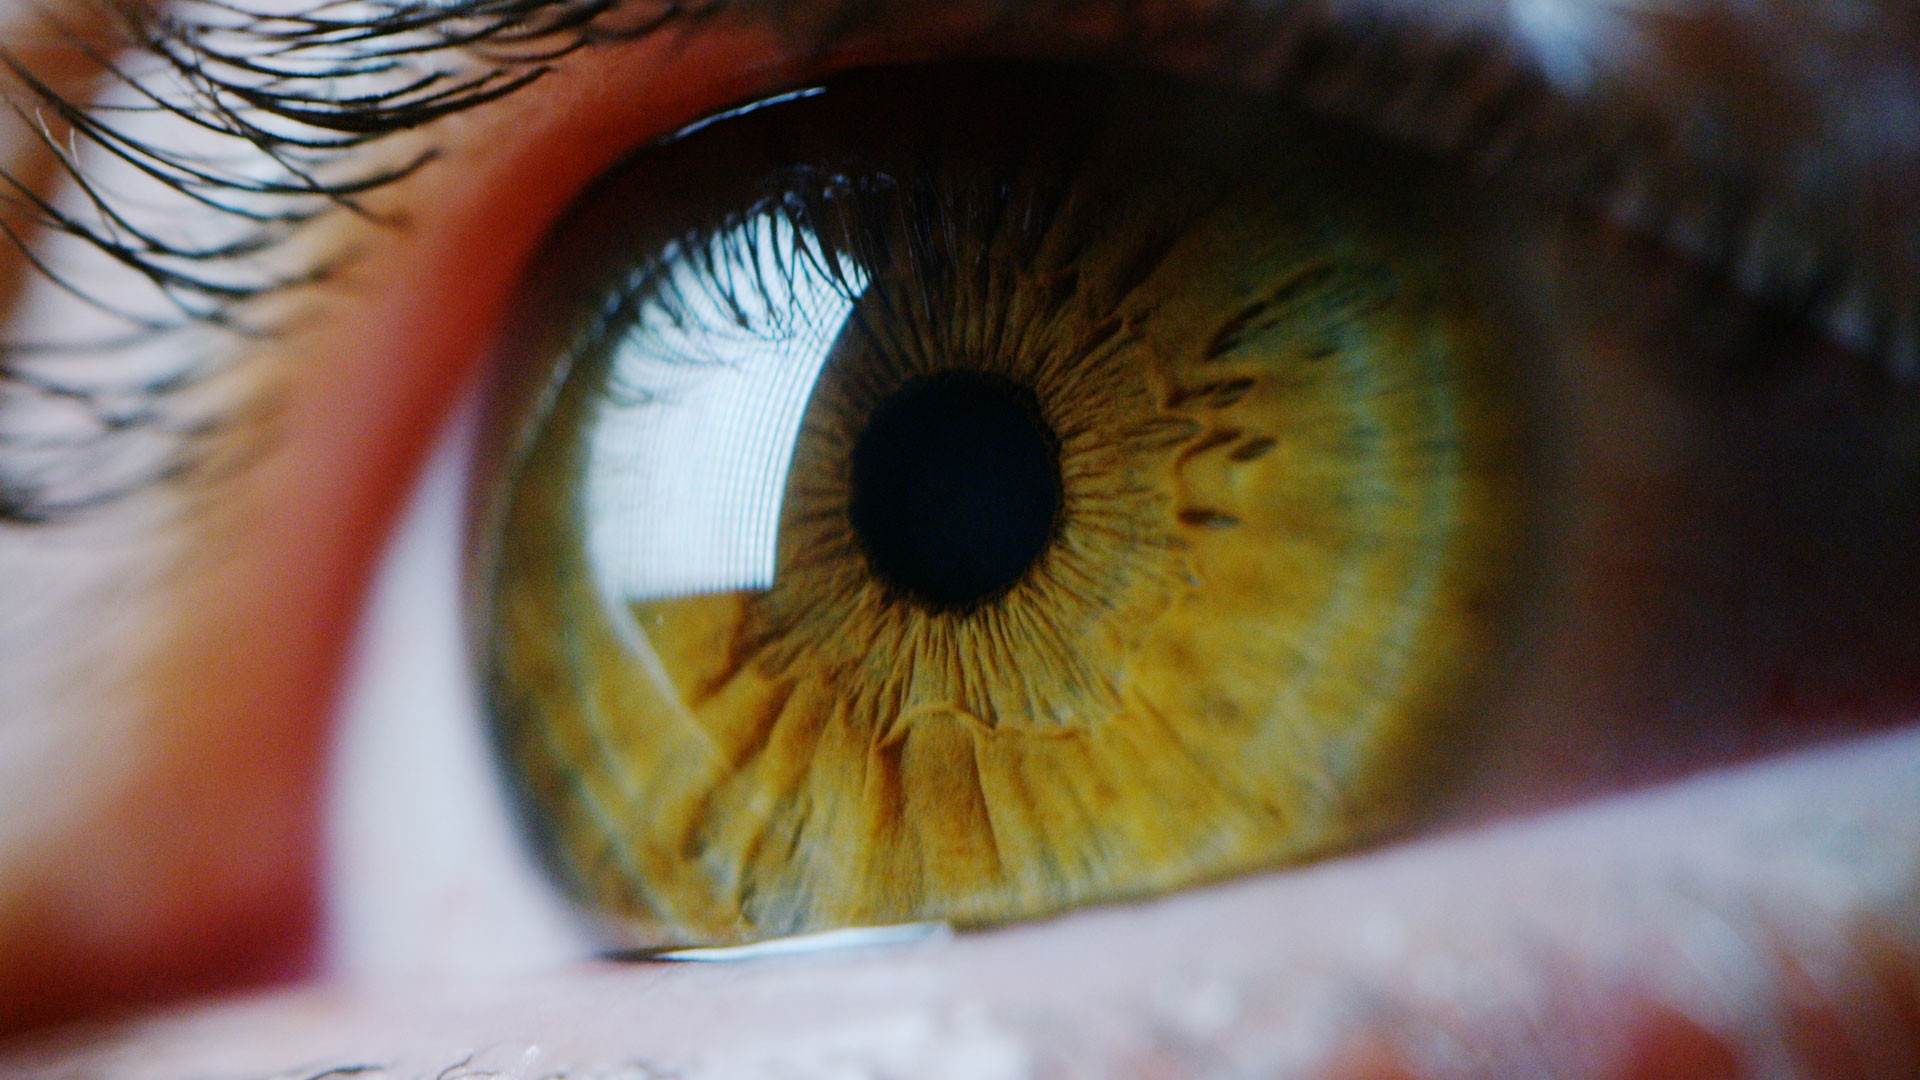 Slider with macroscopic image of a human eye.